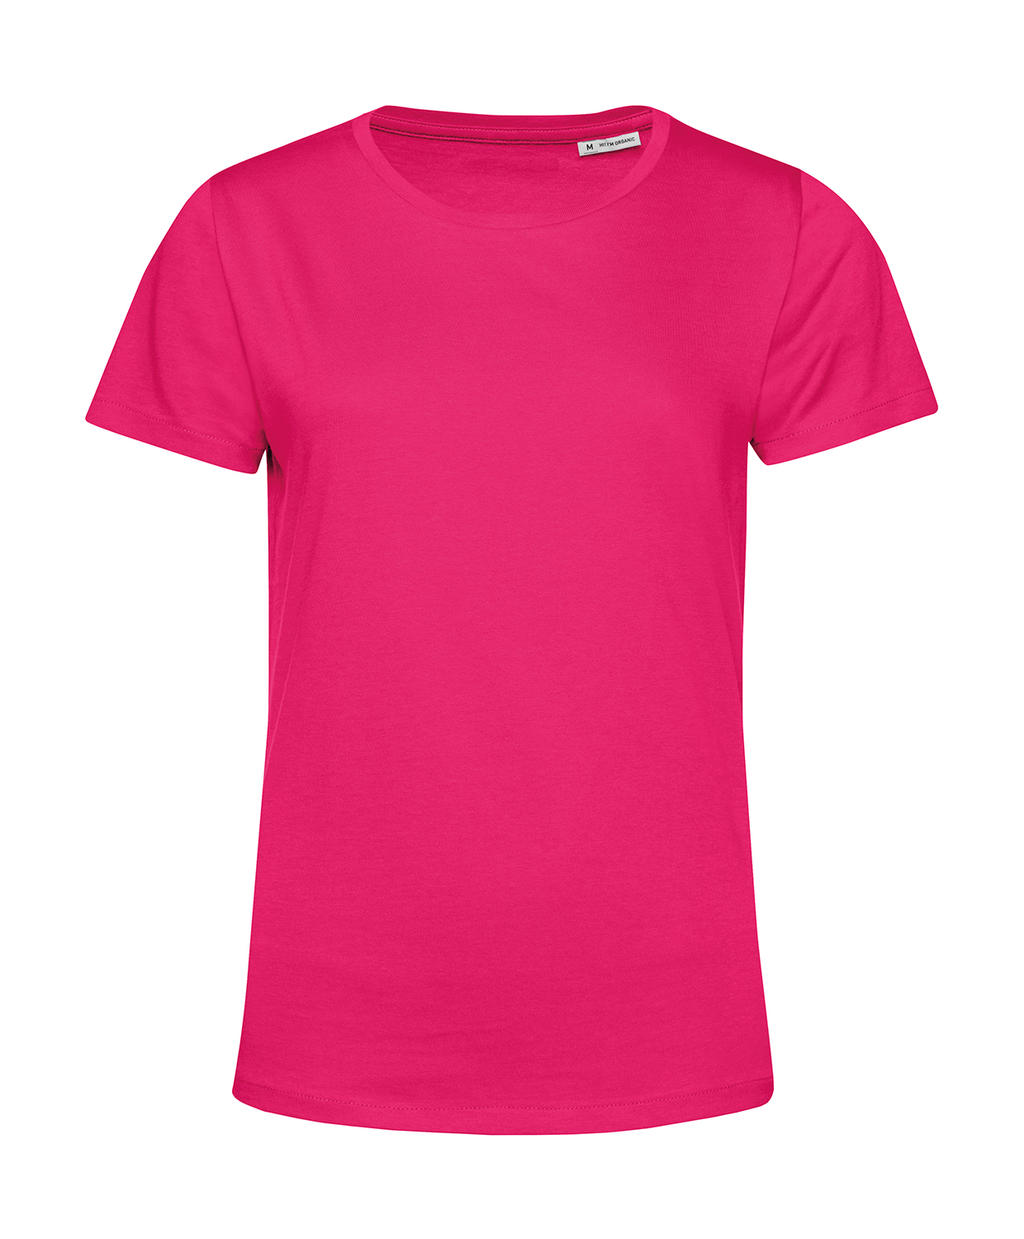 Tričko dámské BC Organic Inspire E150 - tmavě růžové, L